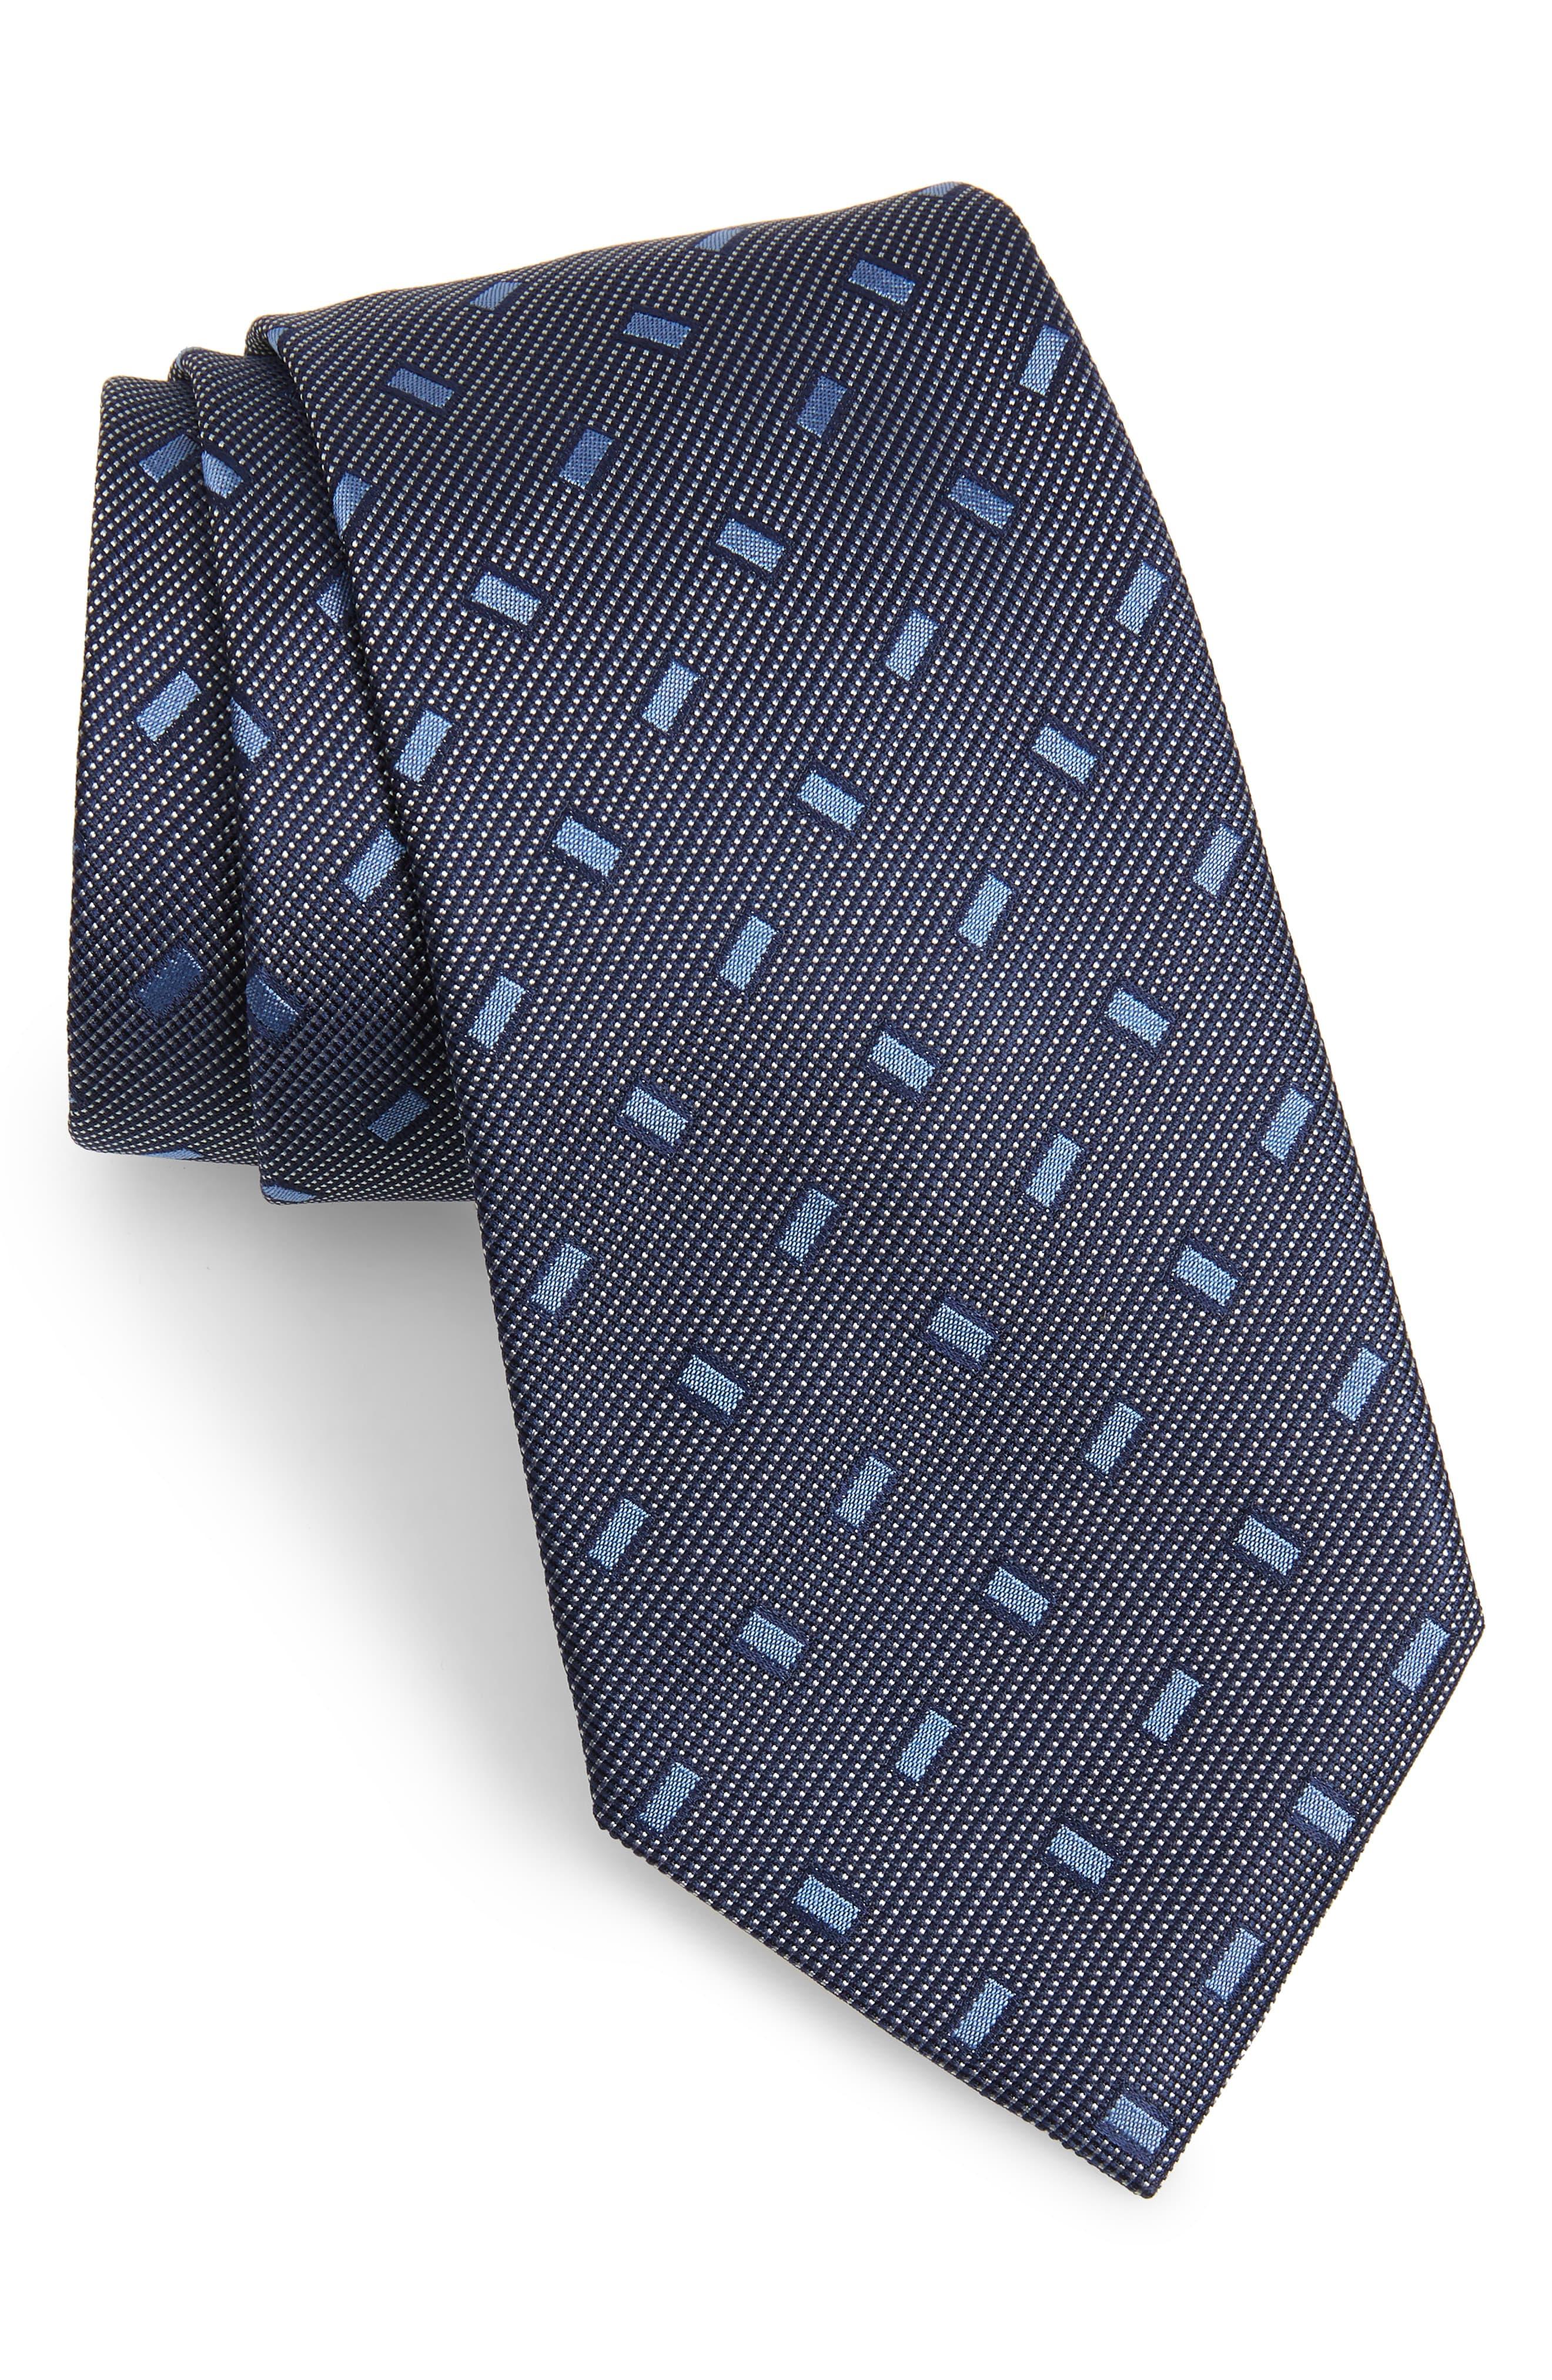 Emporio Armani Medallion Silk Tie in Blue for Men - Lyst